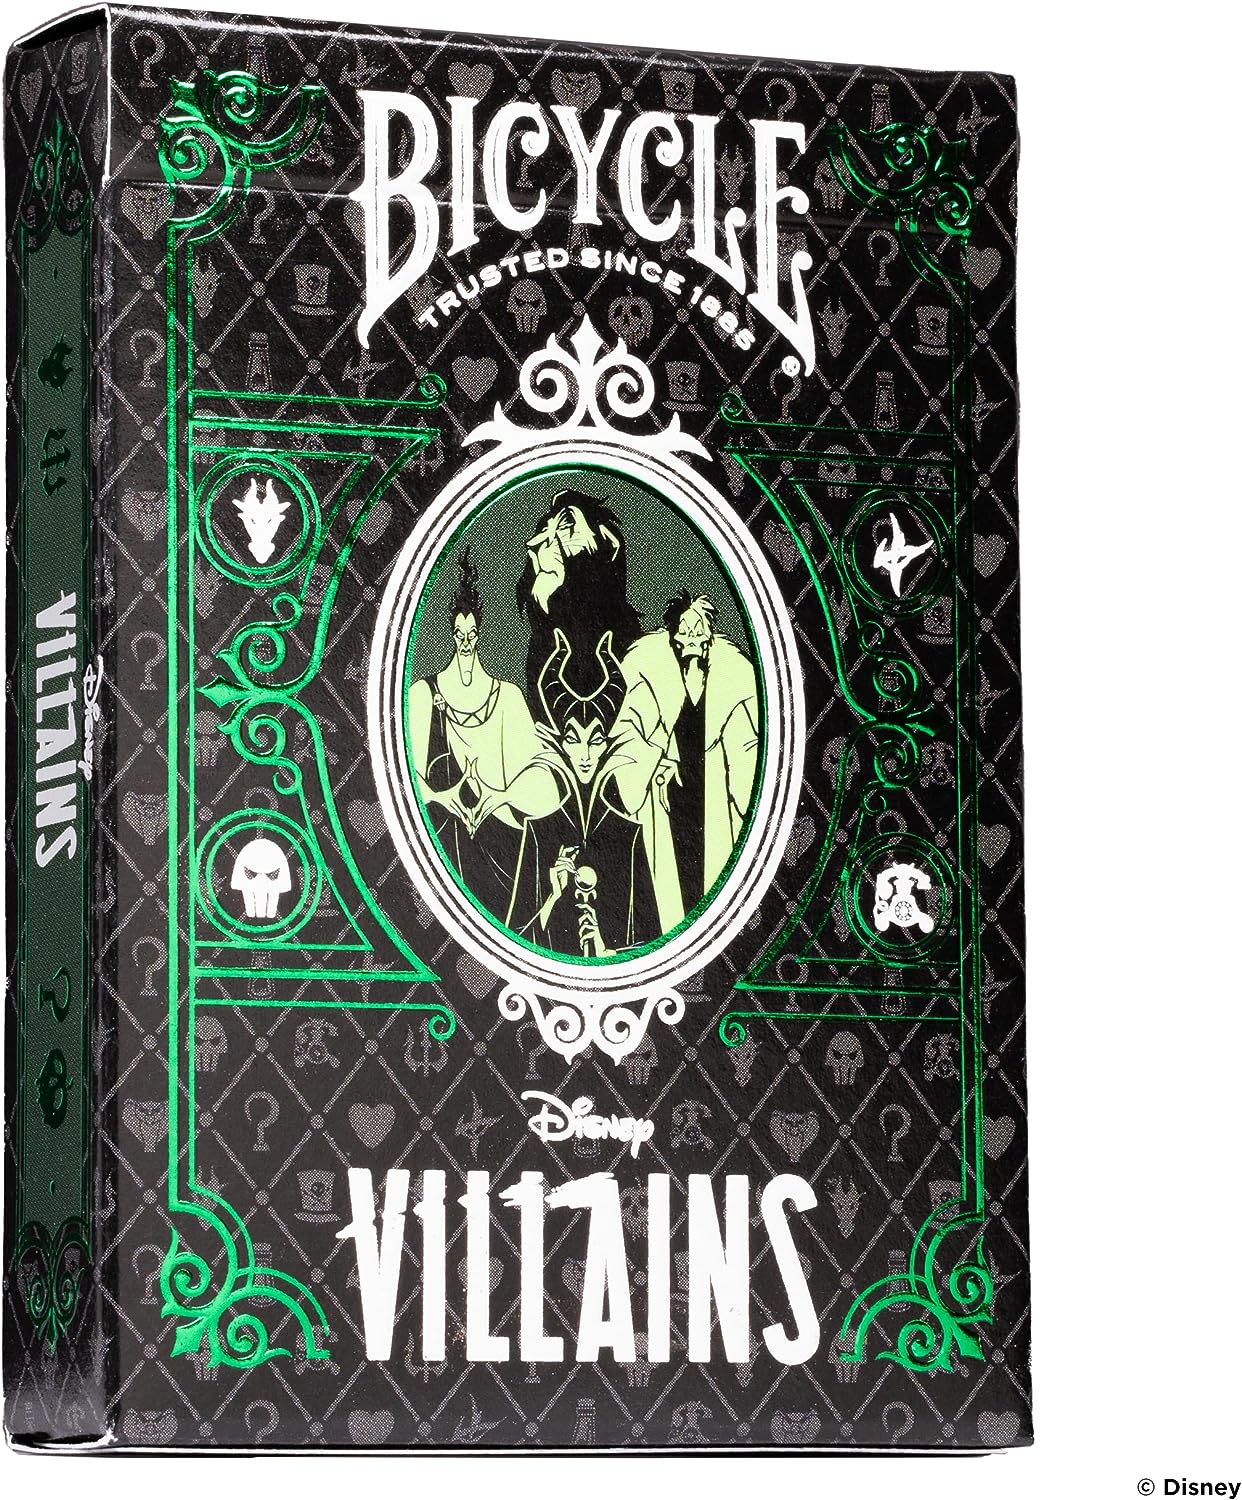 Bicycle Playing Cards: Disney Villains: Green 